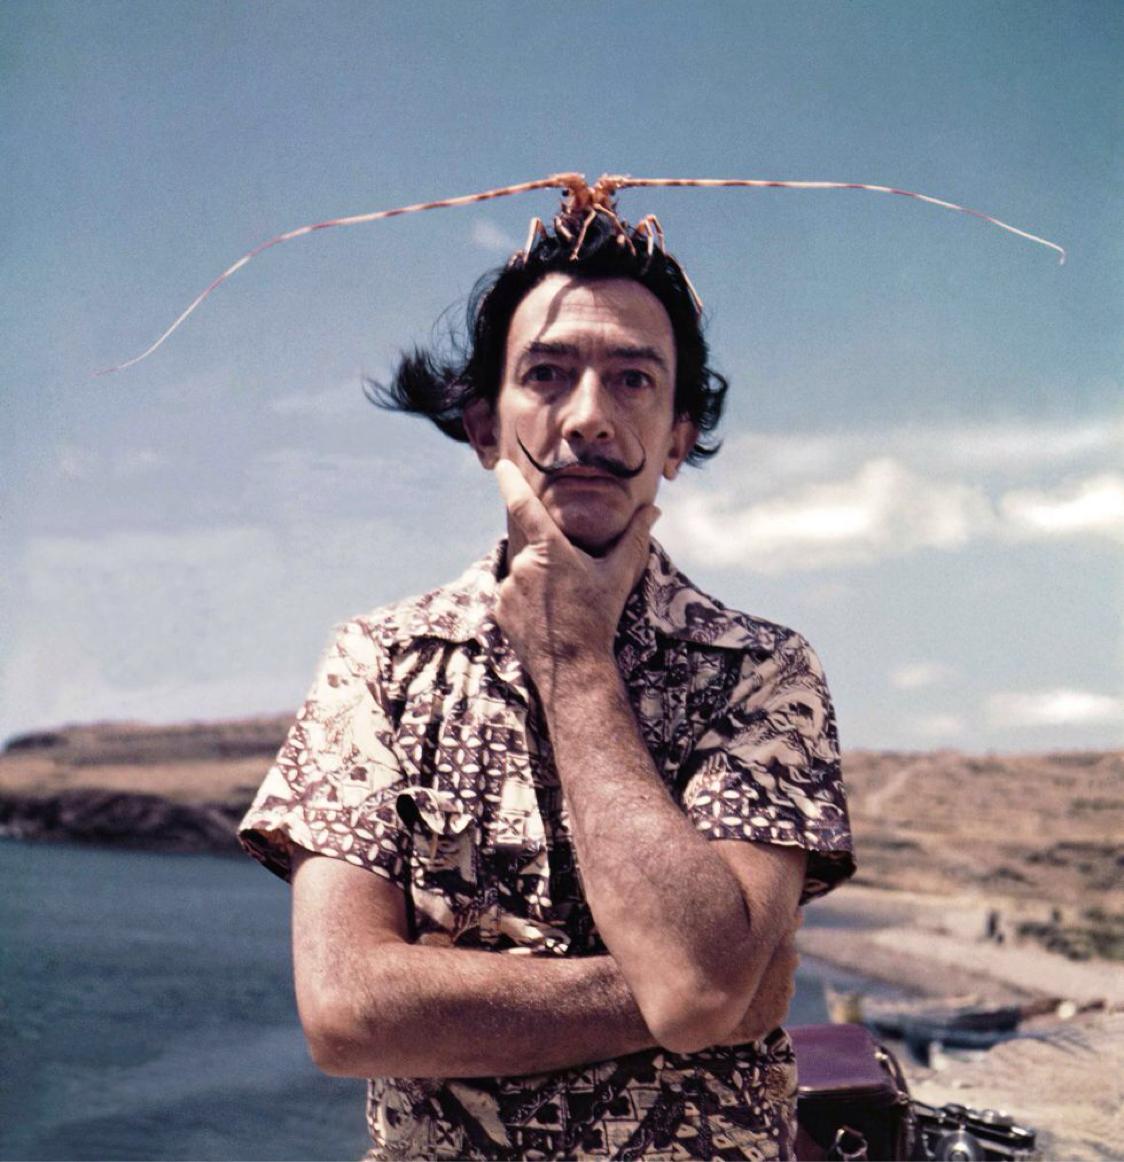 Salvador Dali visiting Spain circa 1950